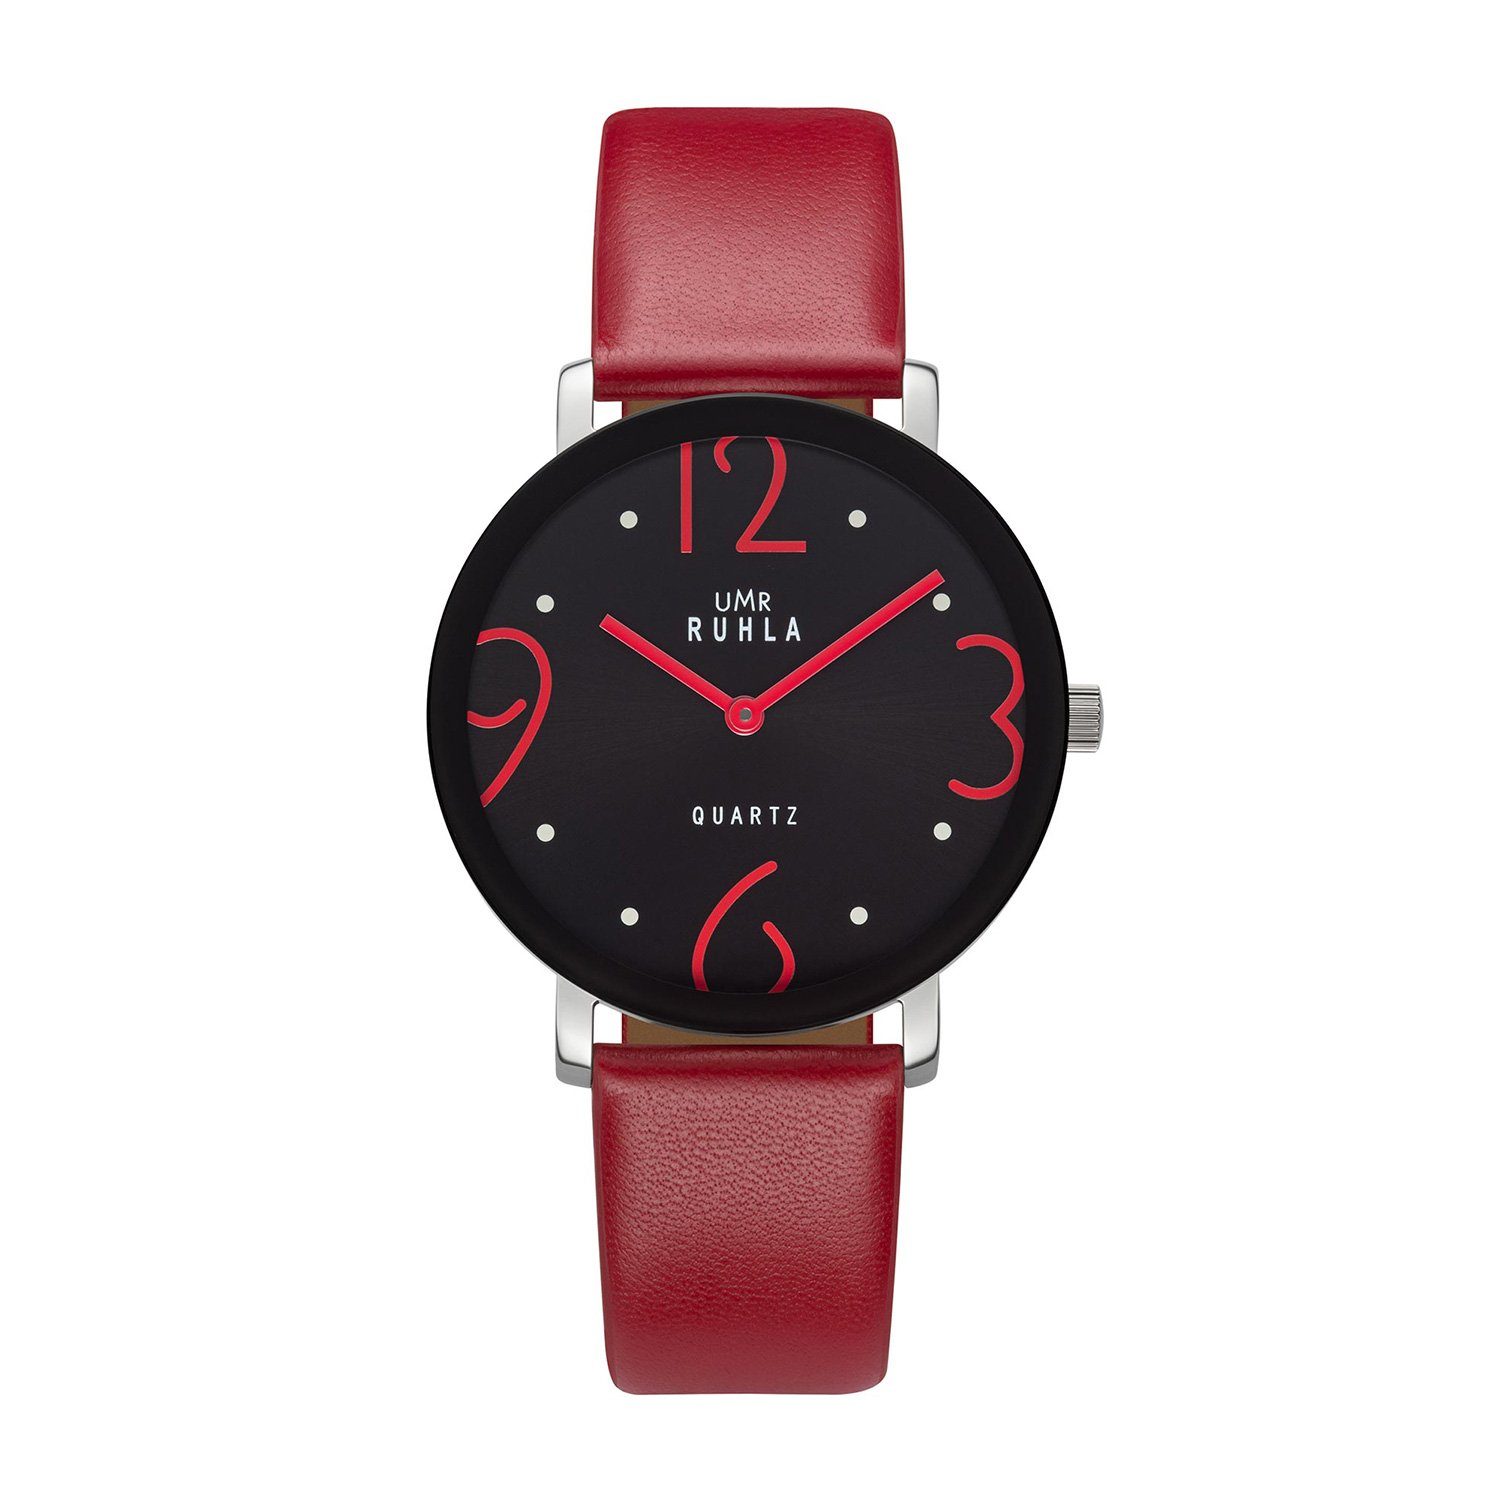 UMR Ruhla Quarzuhr Uhren Manufaktur Ruhla - Quarz-Armbanduhr - Lederband rot